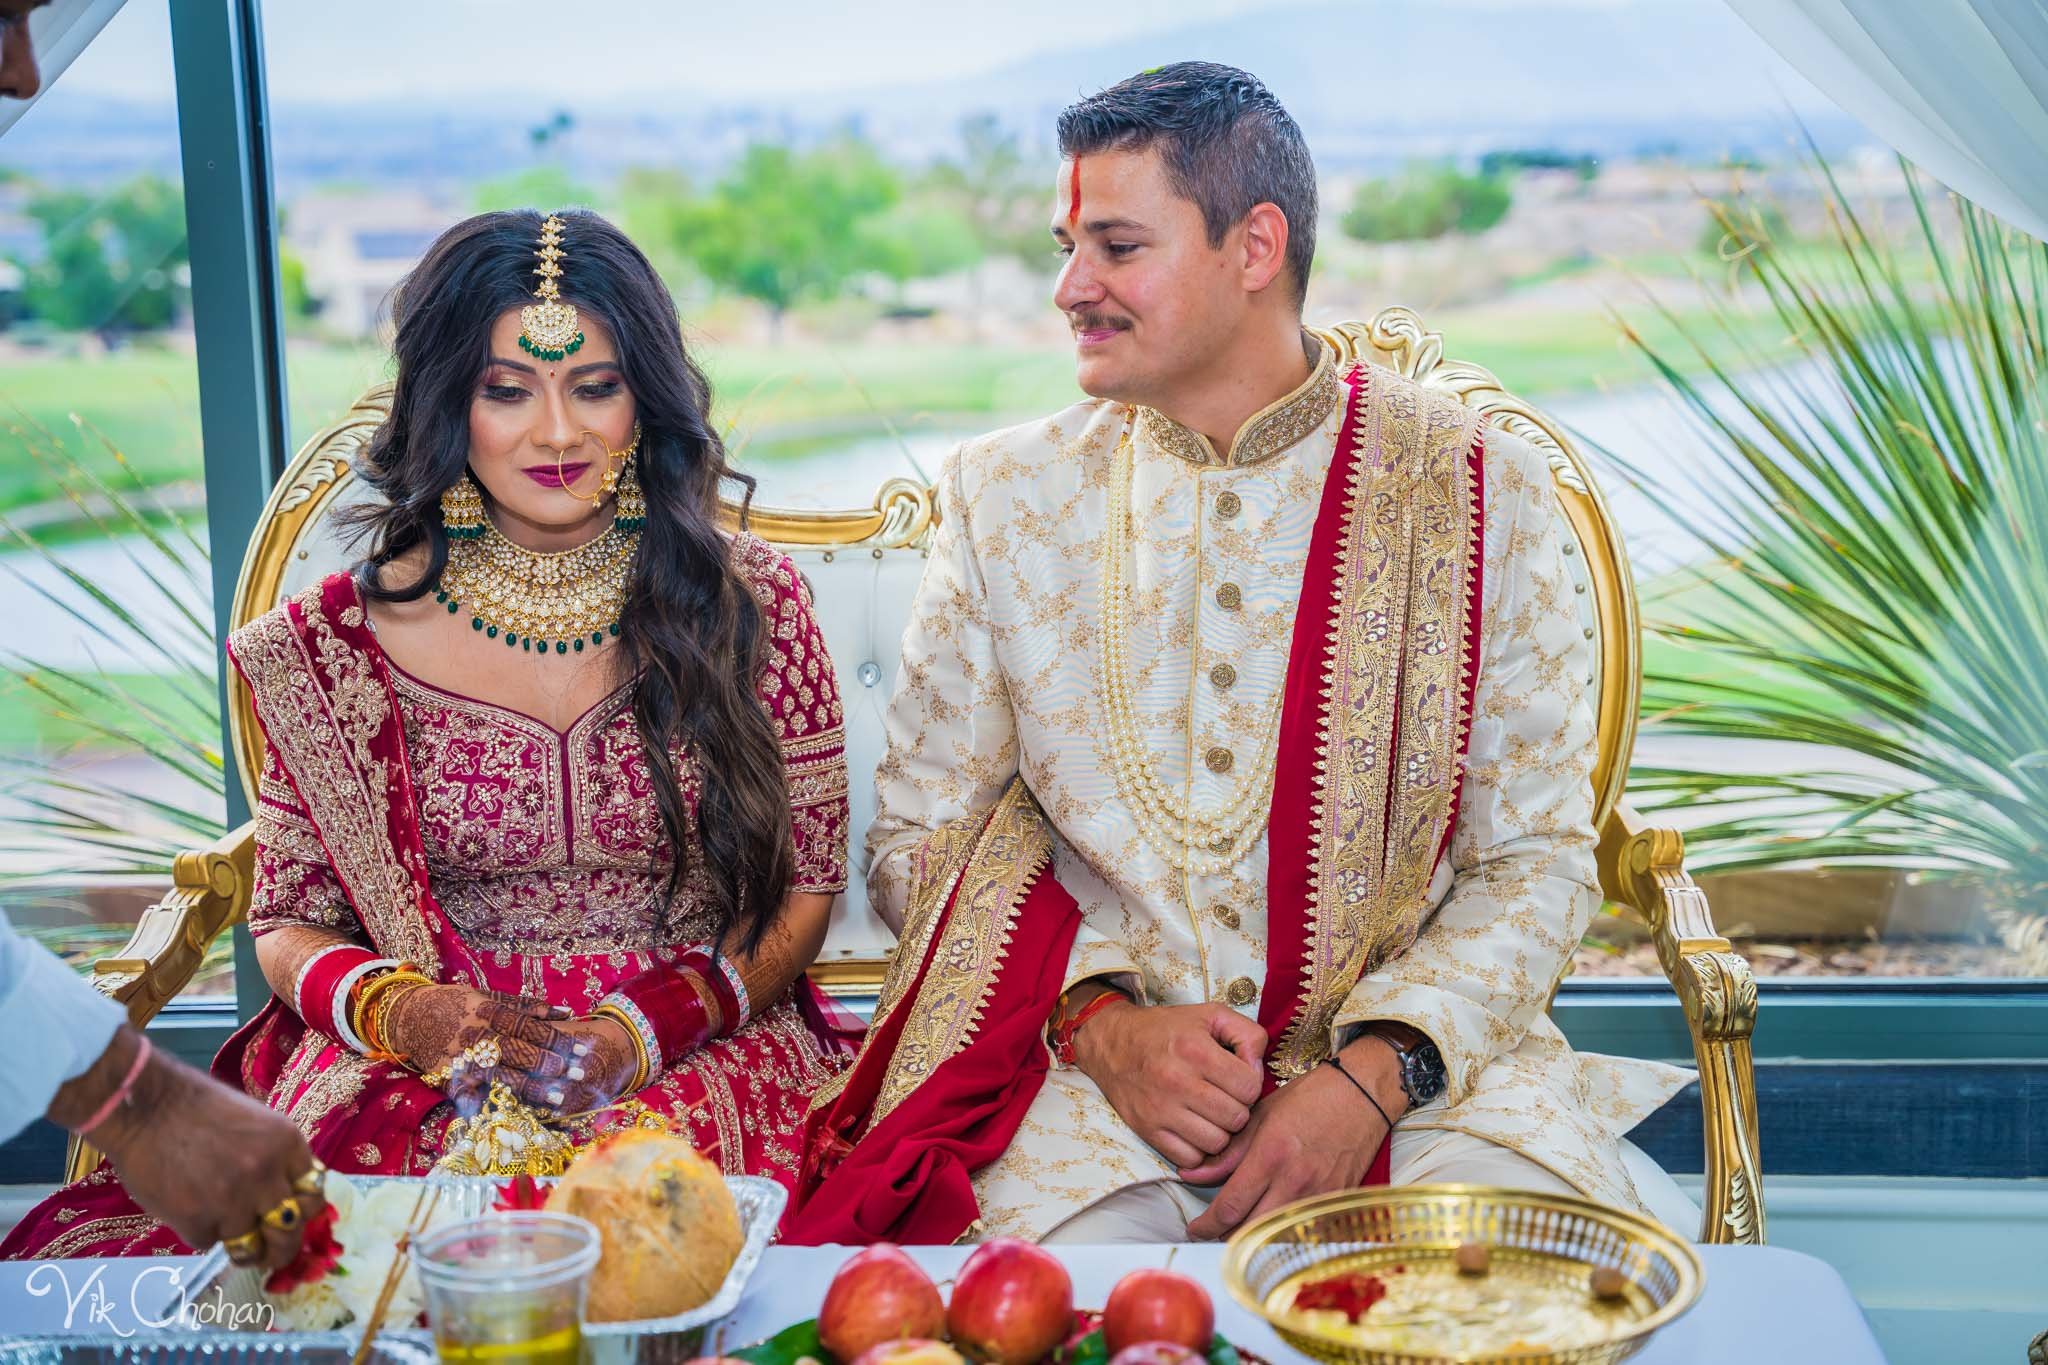 2022-06-09-Annie-&-Steven-Las-Vegas-Indian-Wedding-Ceremony-Photography-Vik-Chohan-Photography-Photo-Booth-Social-Media-VCP-105.jpg